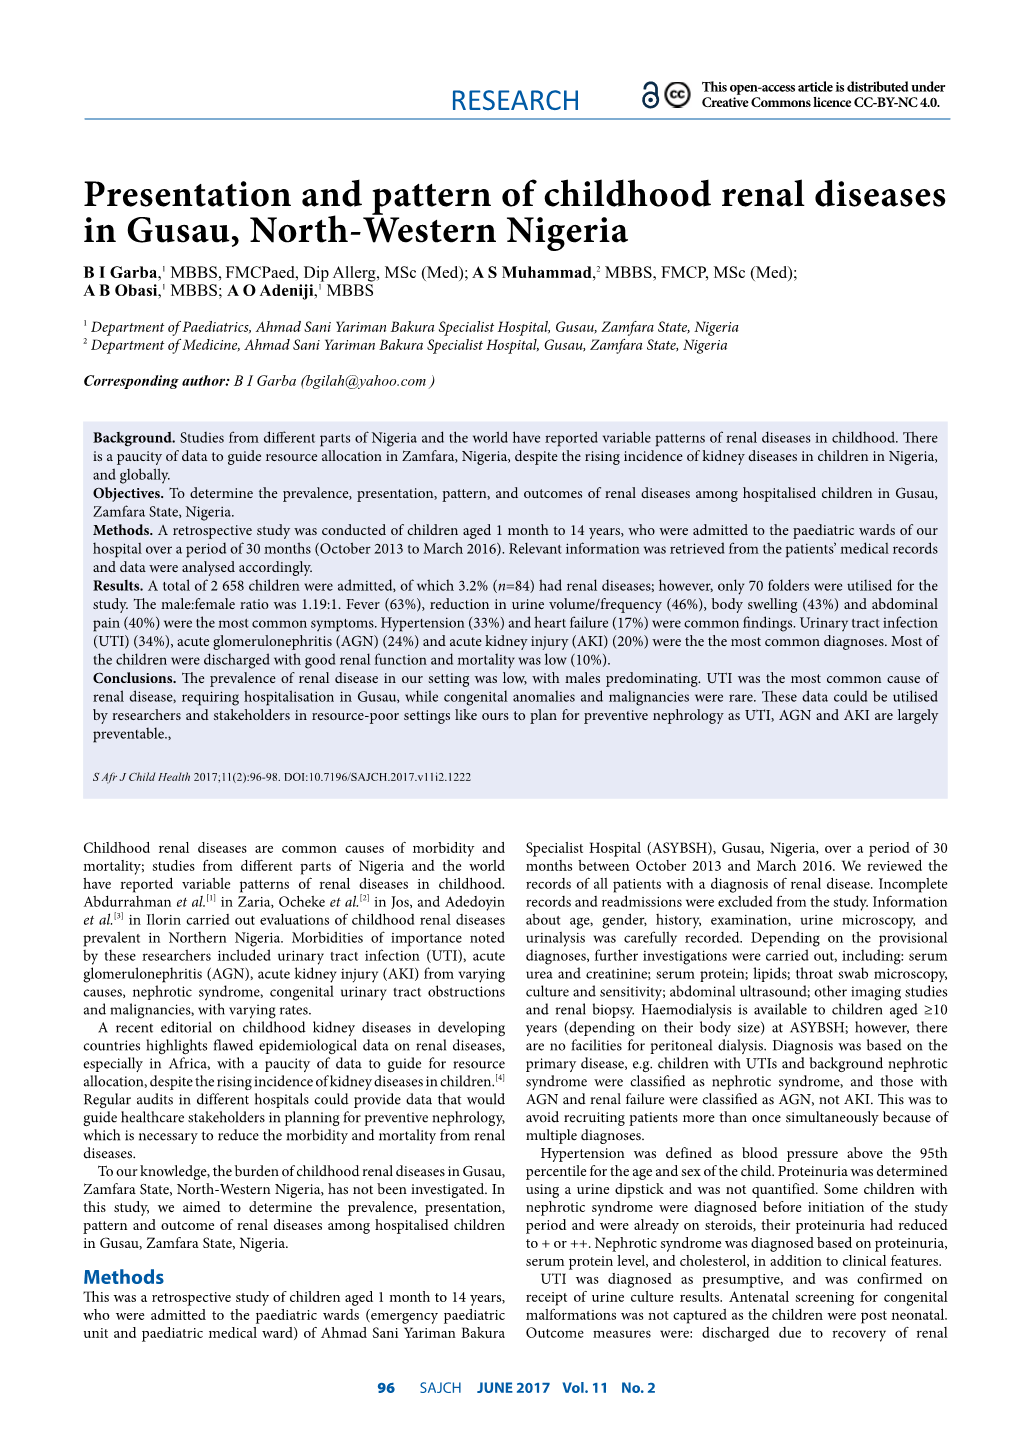 Presentation and Pattern of Childhood Renal Diseases in Gusau, North-Western Nigeria